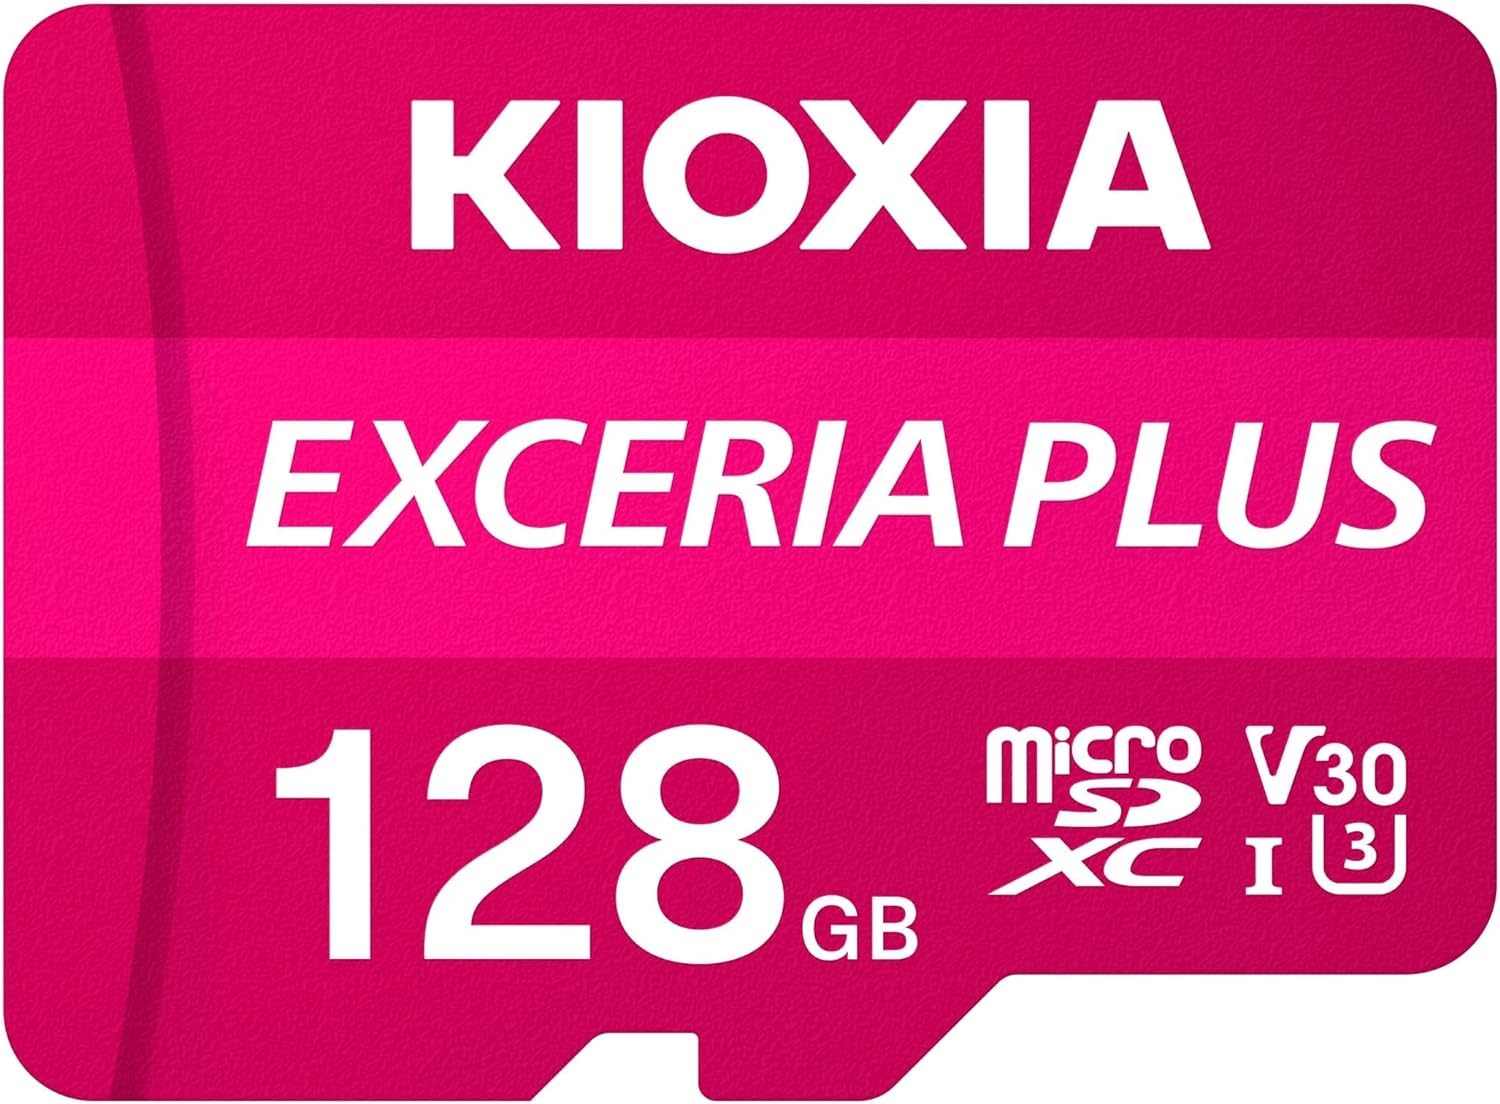 KIOXIA(キオクシア) 旧東芝メモリ microSD 128GB UHS-I U3 V30 Class10 microSDXC (最大読出速度100MB/s) Nintendo Switch動作確認済 国内サポート正規品 メーカー保証5年 KLMPA128G